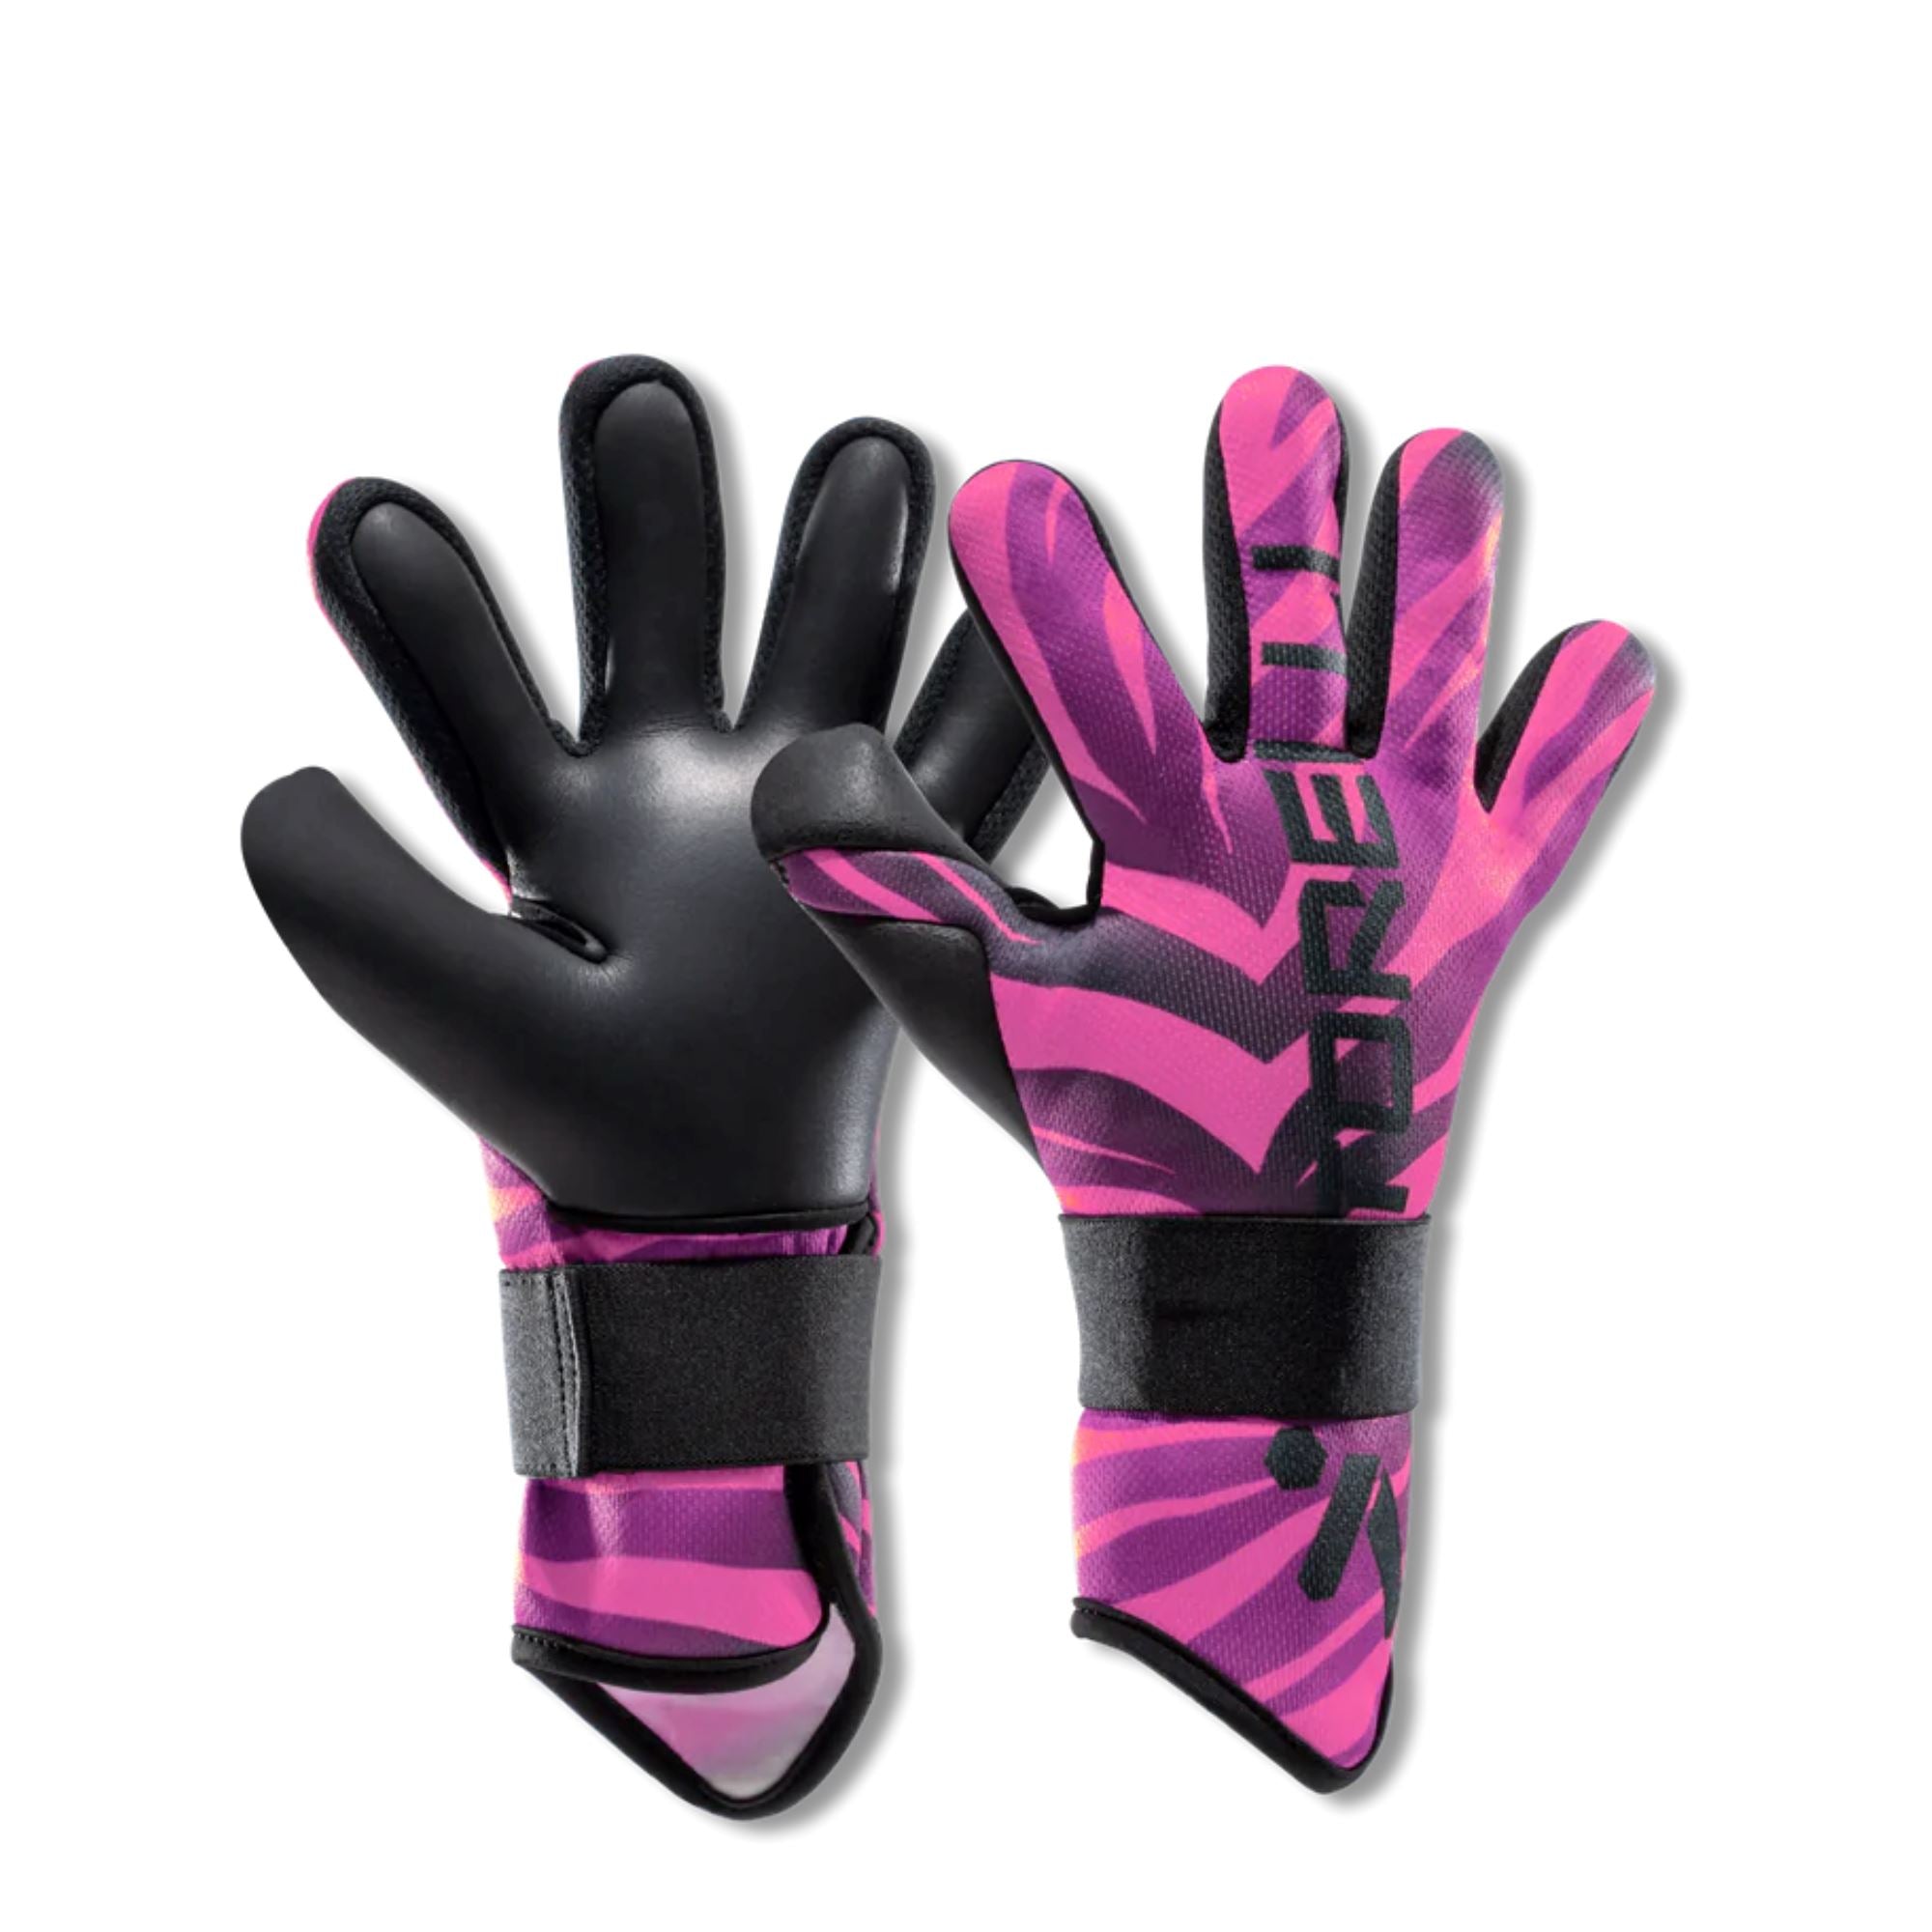 Challenger Youth GK Gloves by Storelli - Pink Cheetah - ITASPORT